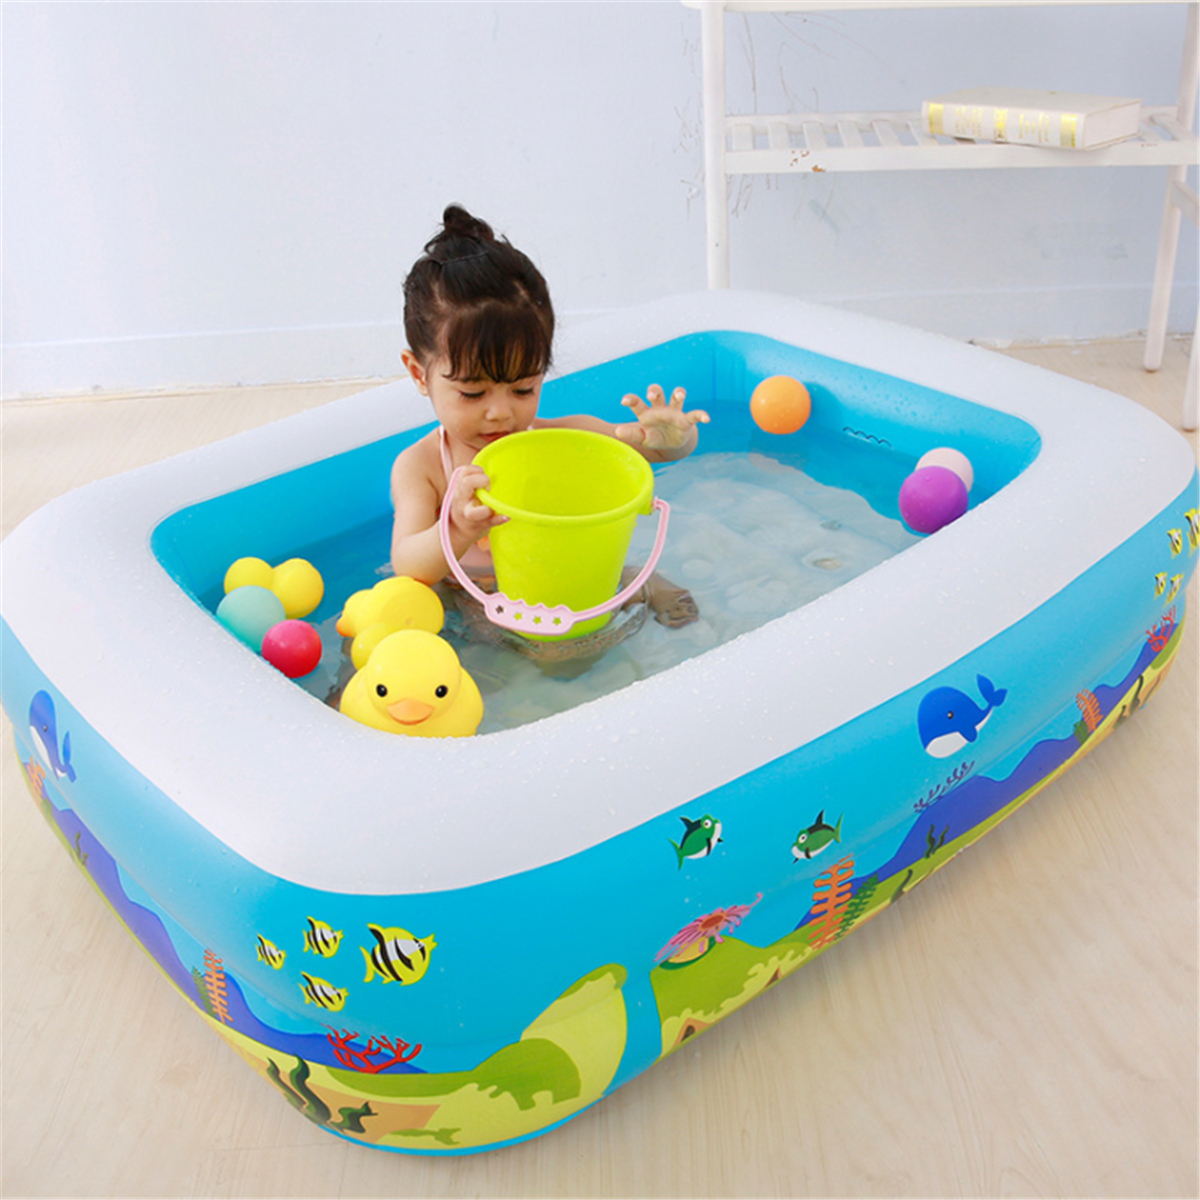 453x338x138-Inflatable-Swimming-Pool-Family-Play-Center-Swim-Baby-Kids-Child-Backyard-Garden-1551978-6